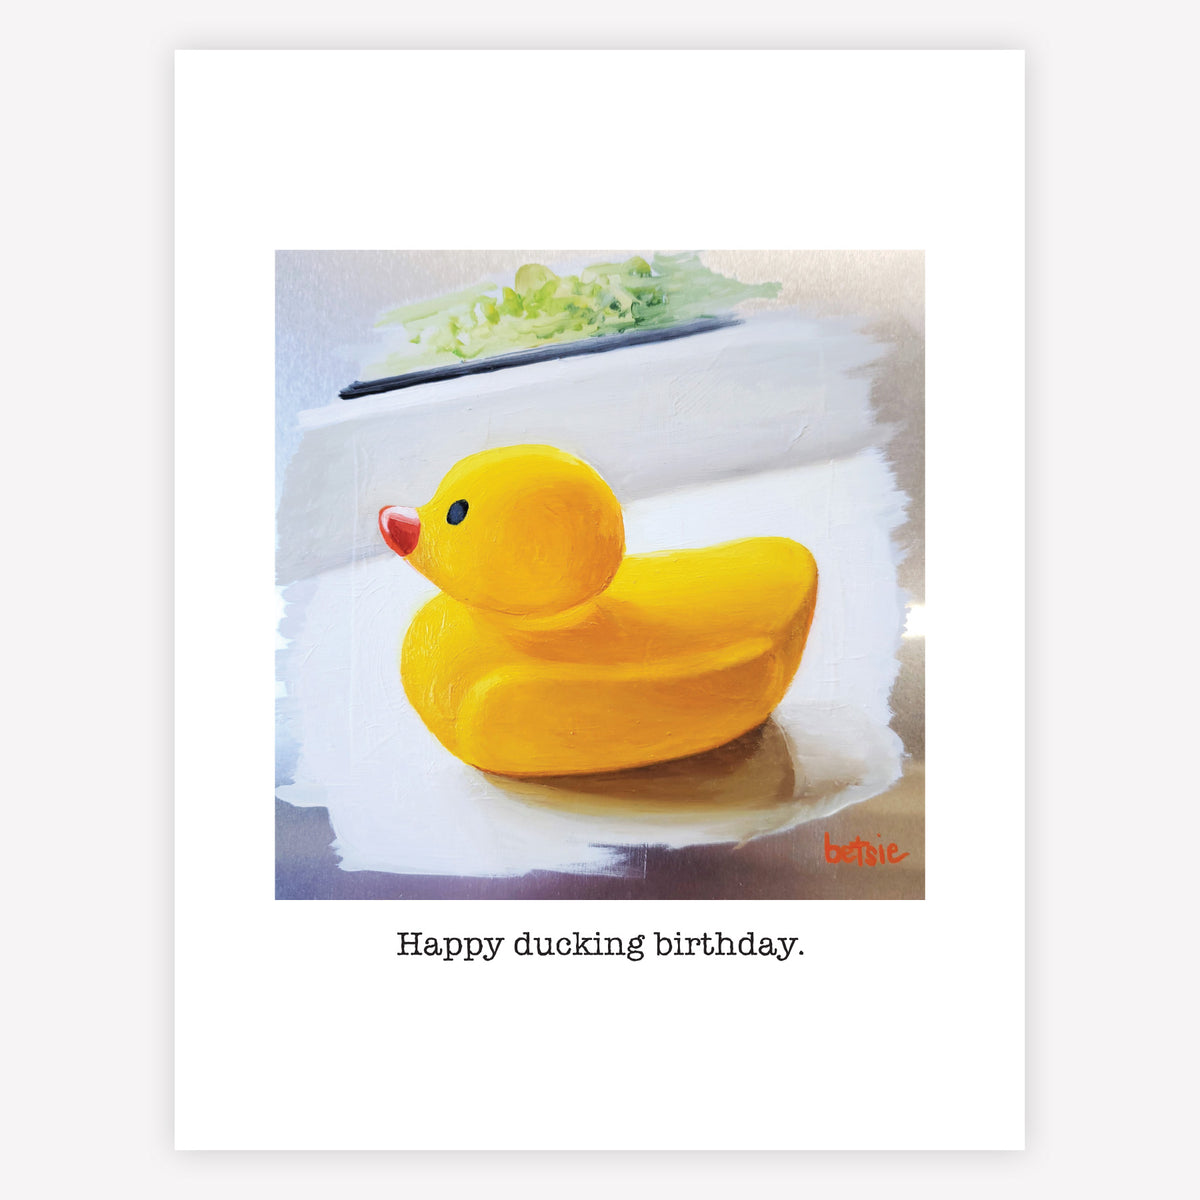 "Happy ducking birthday" Greeting Card